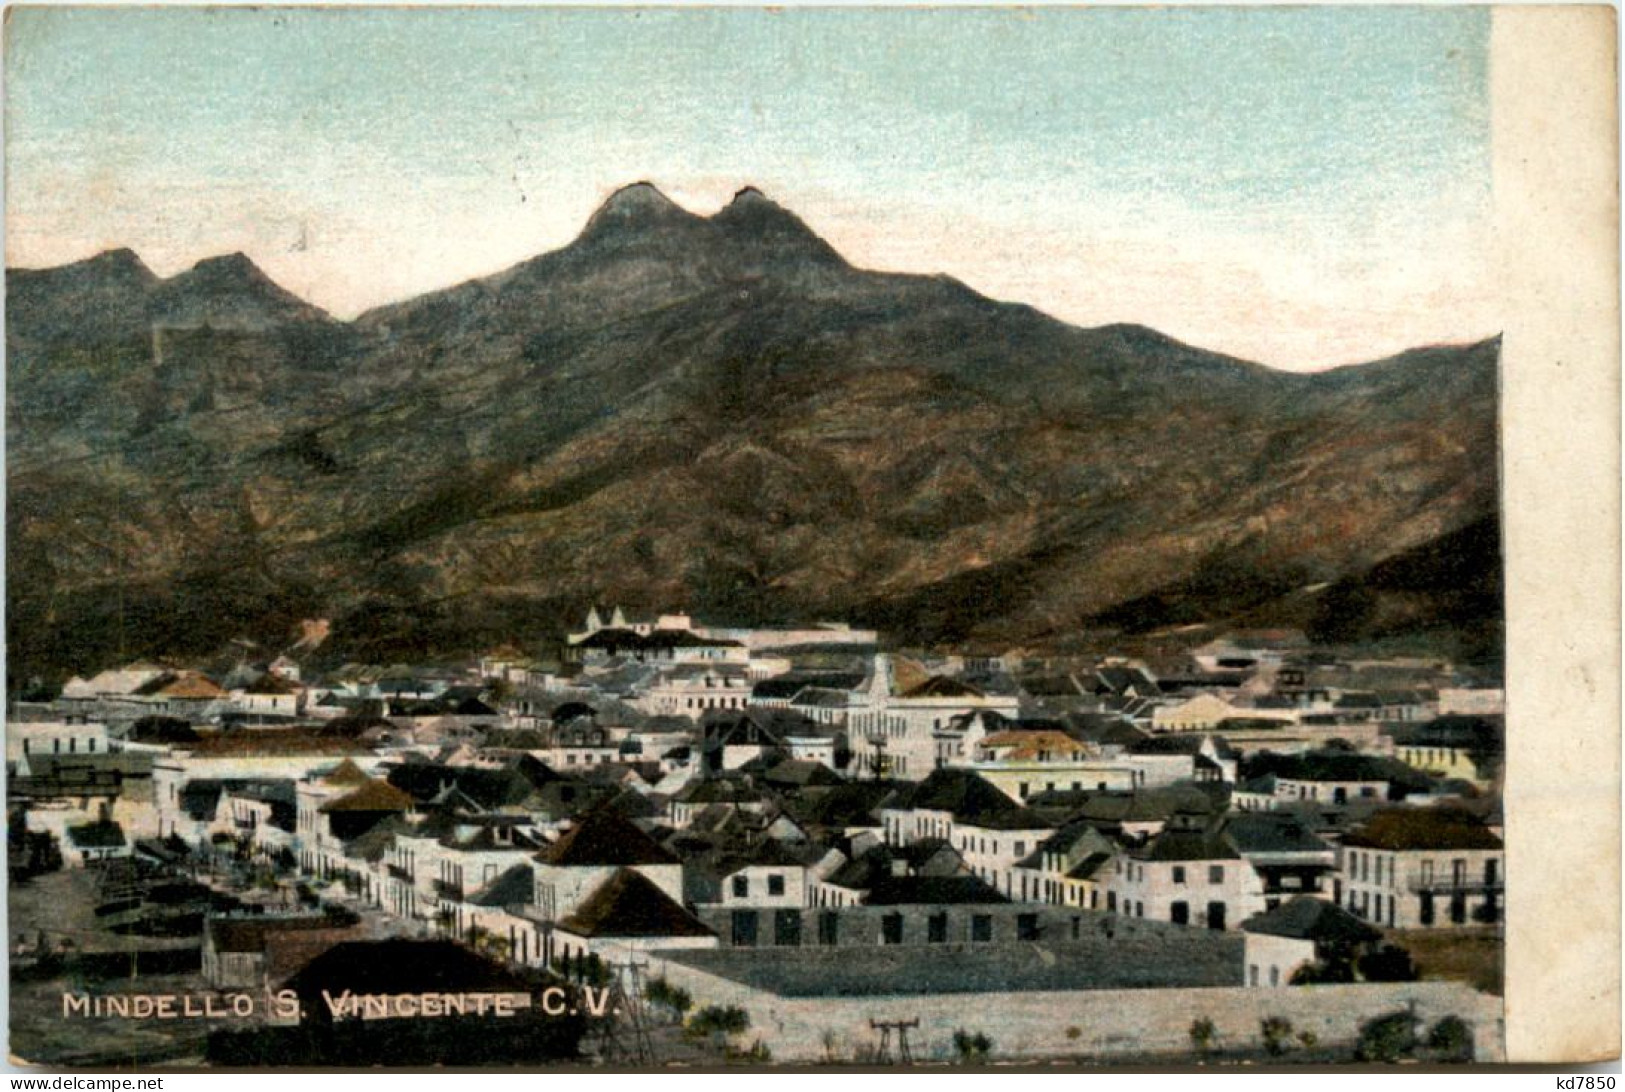 Mindello S. Vincente - Cabo Verde